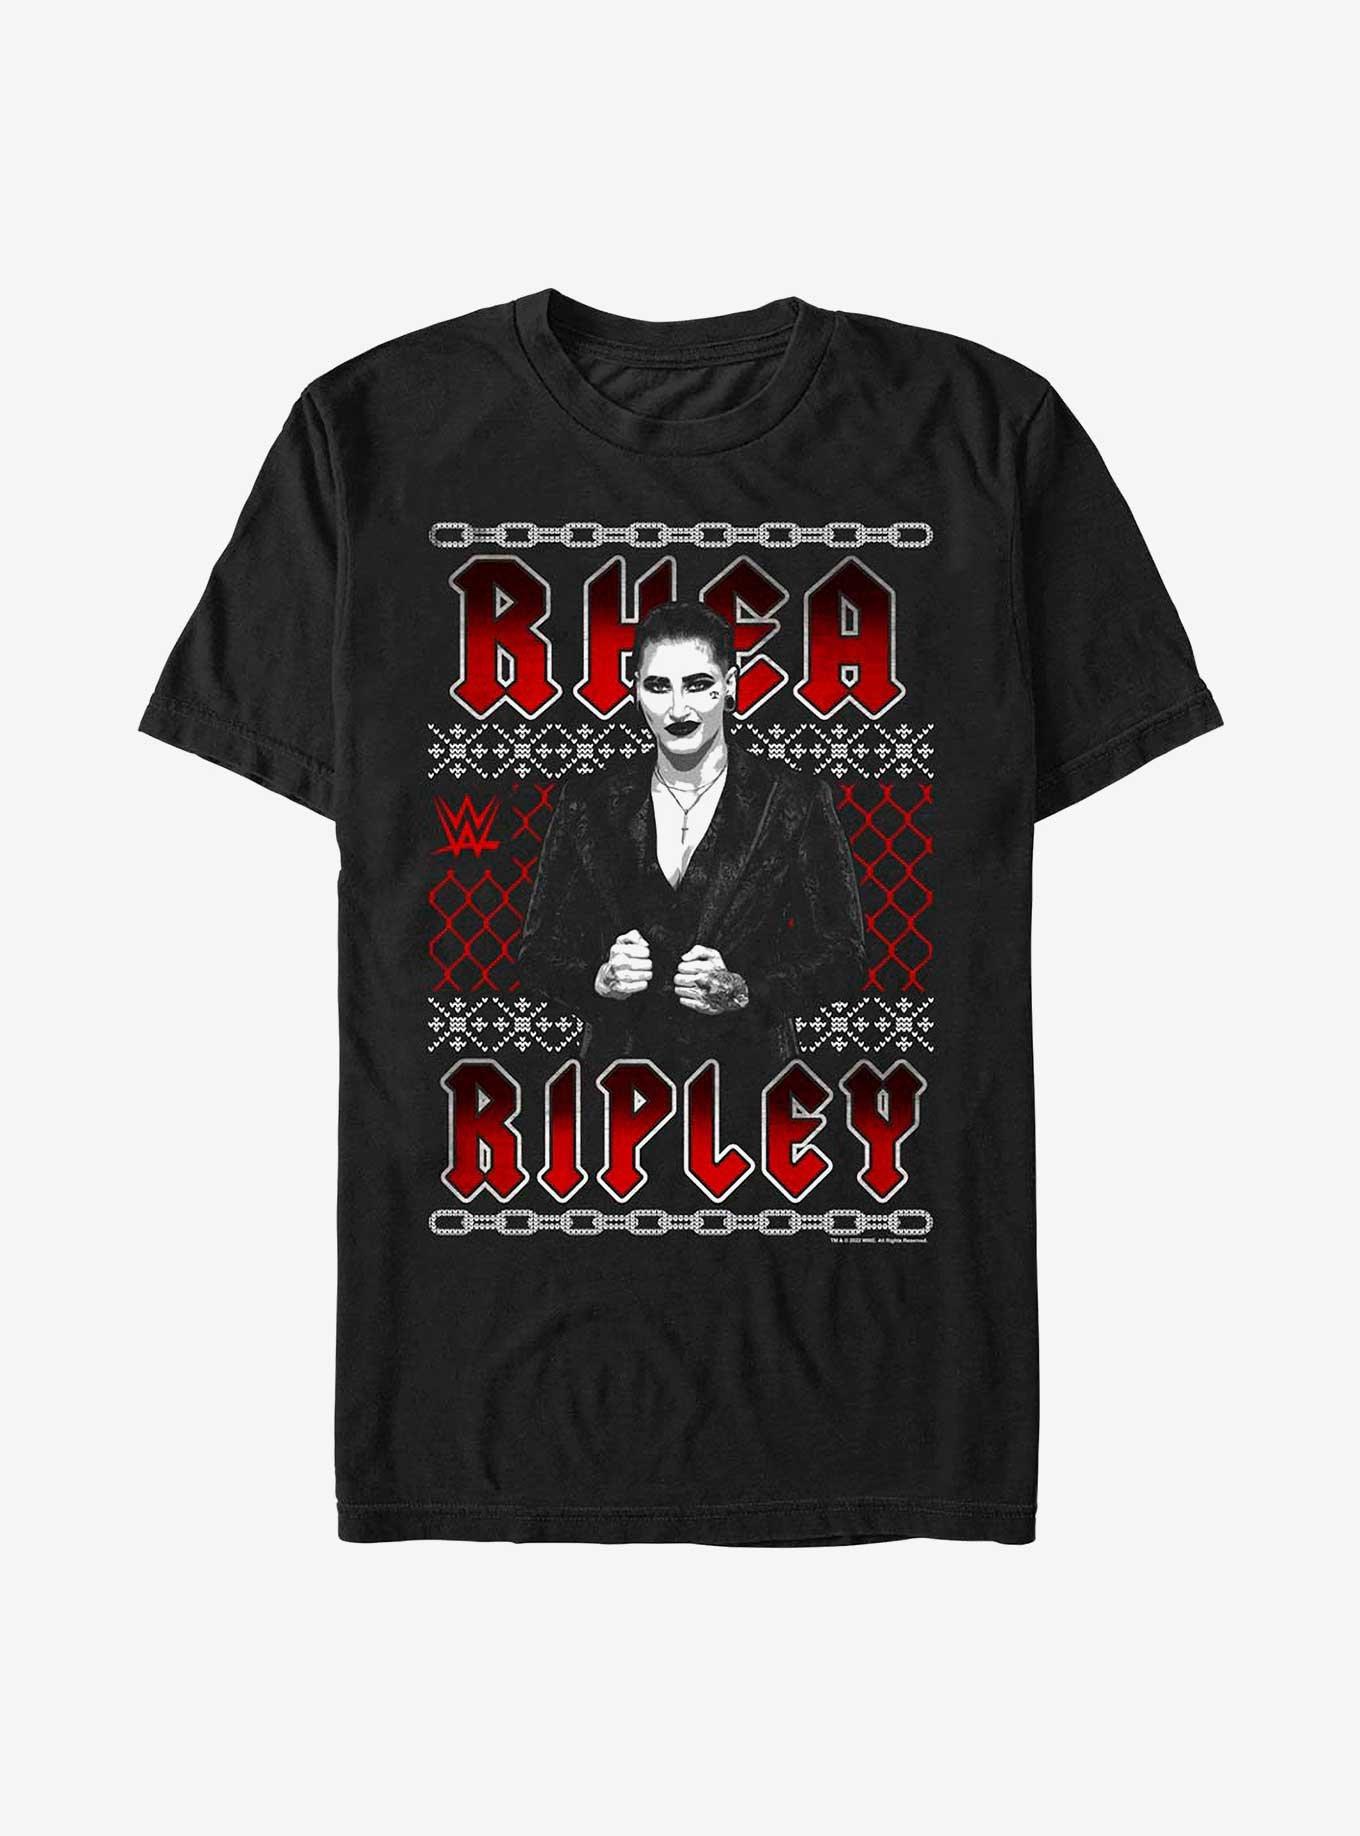 WWE - Rhea Ripley Pop! Vinyl Figure – B&K Collectables